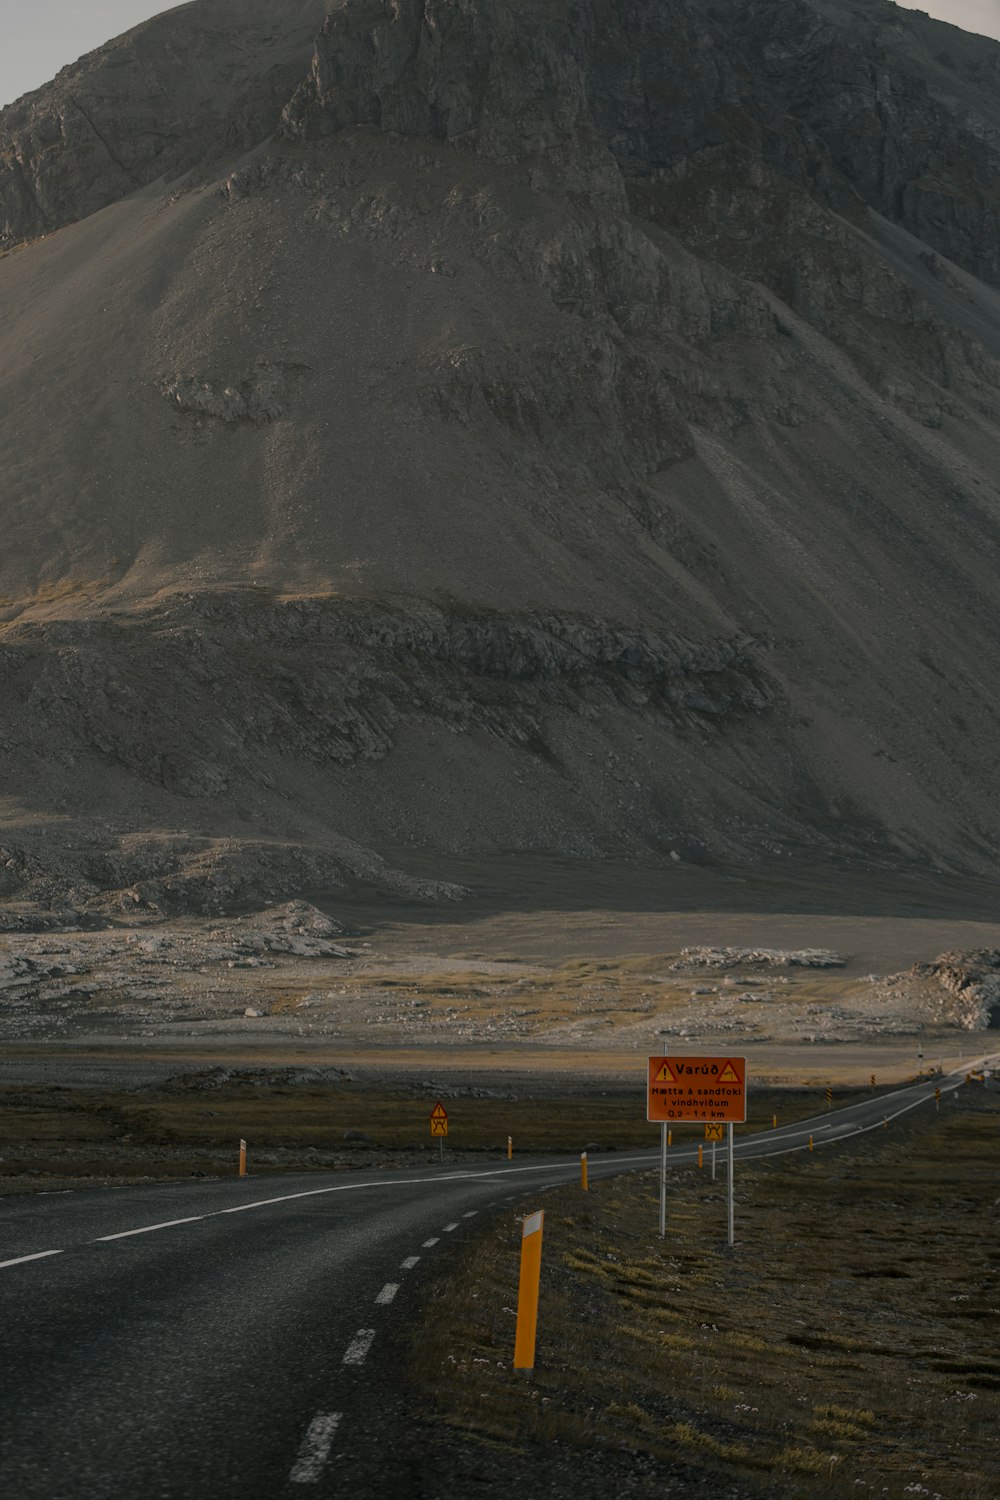 gray asphalt road near gray mountain during daytime